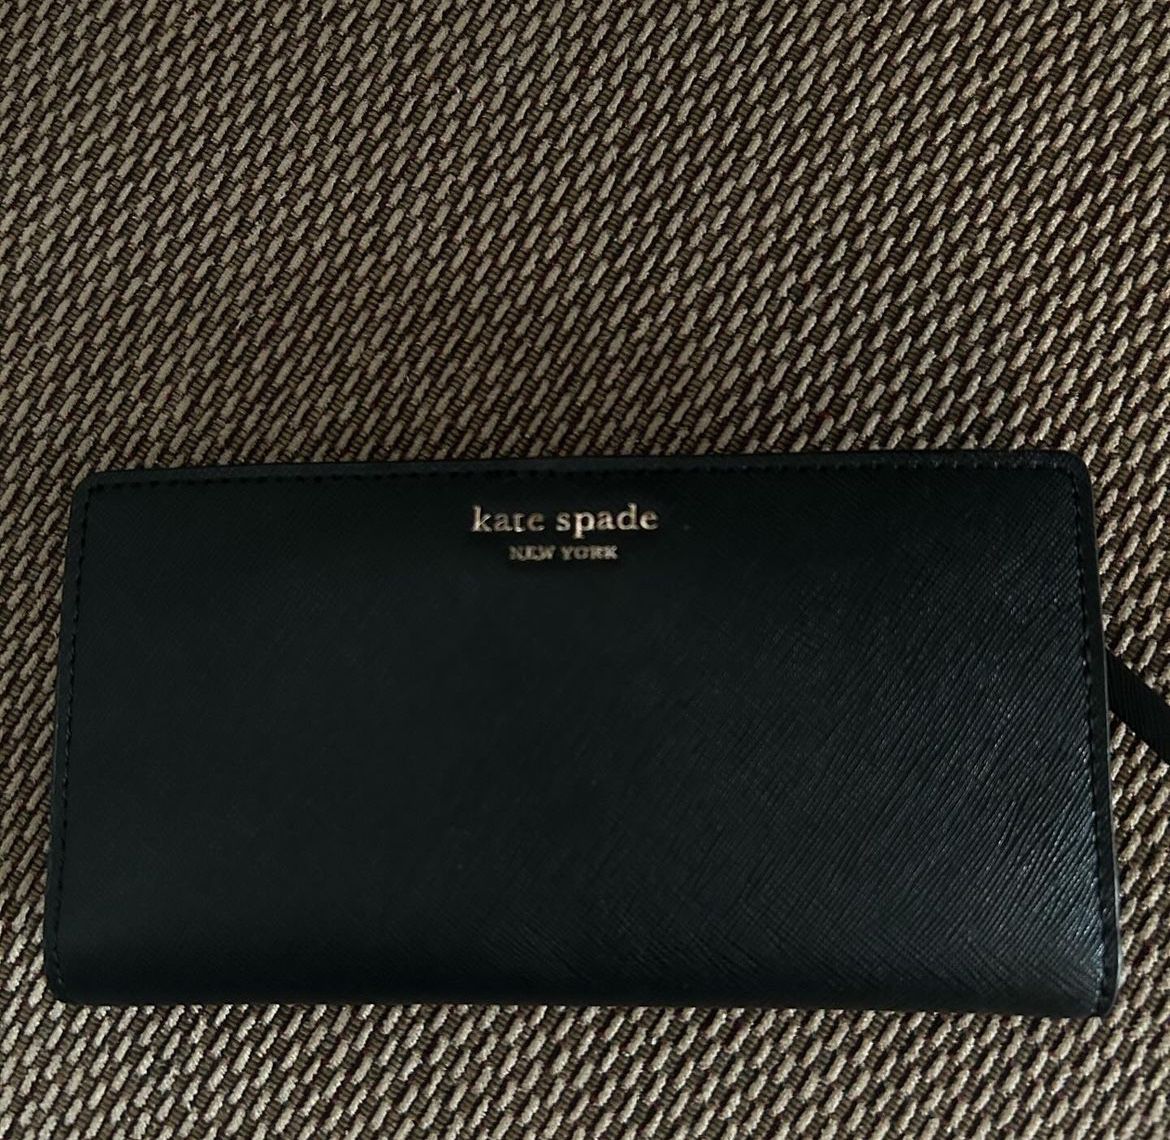 Kate Spade Card wallet